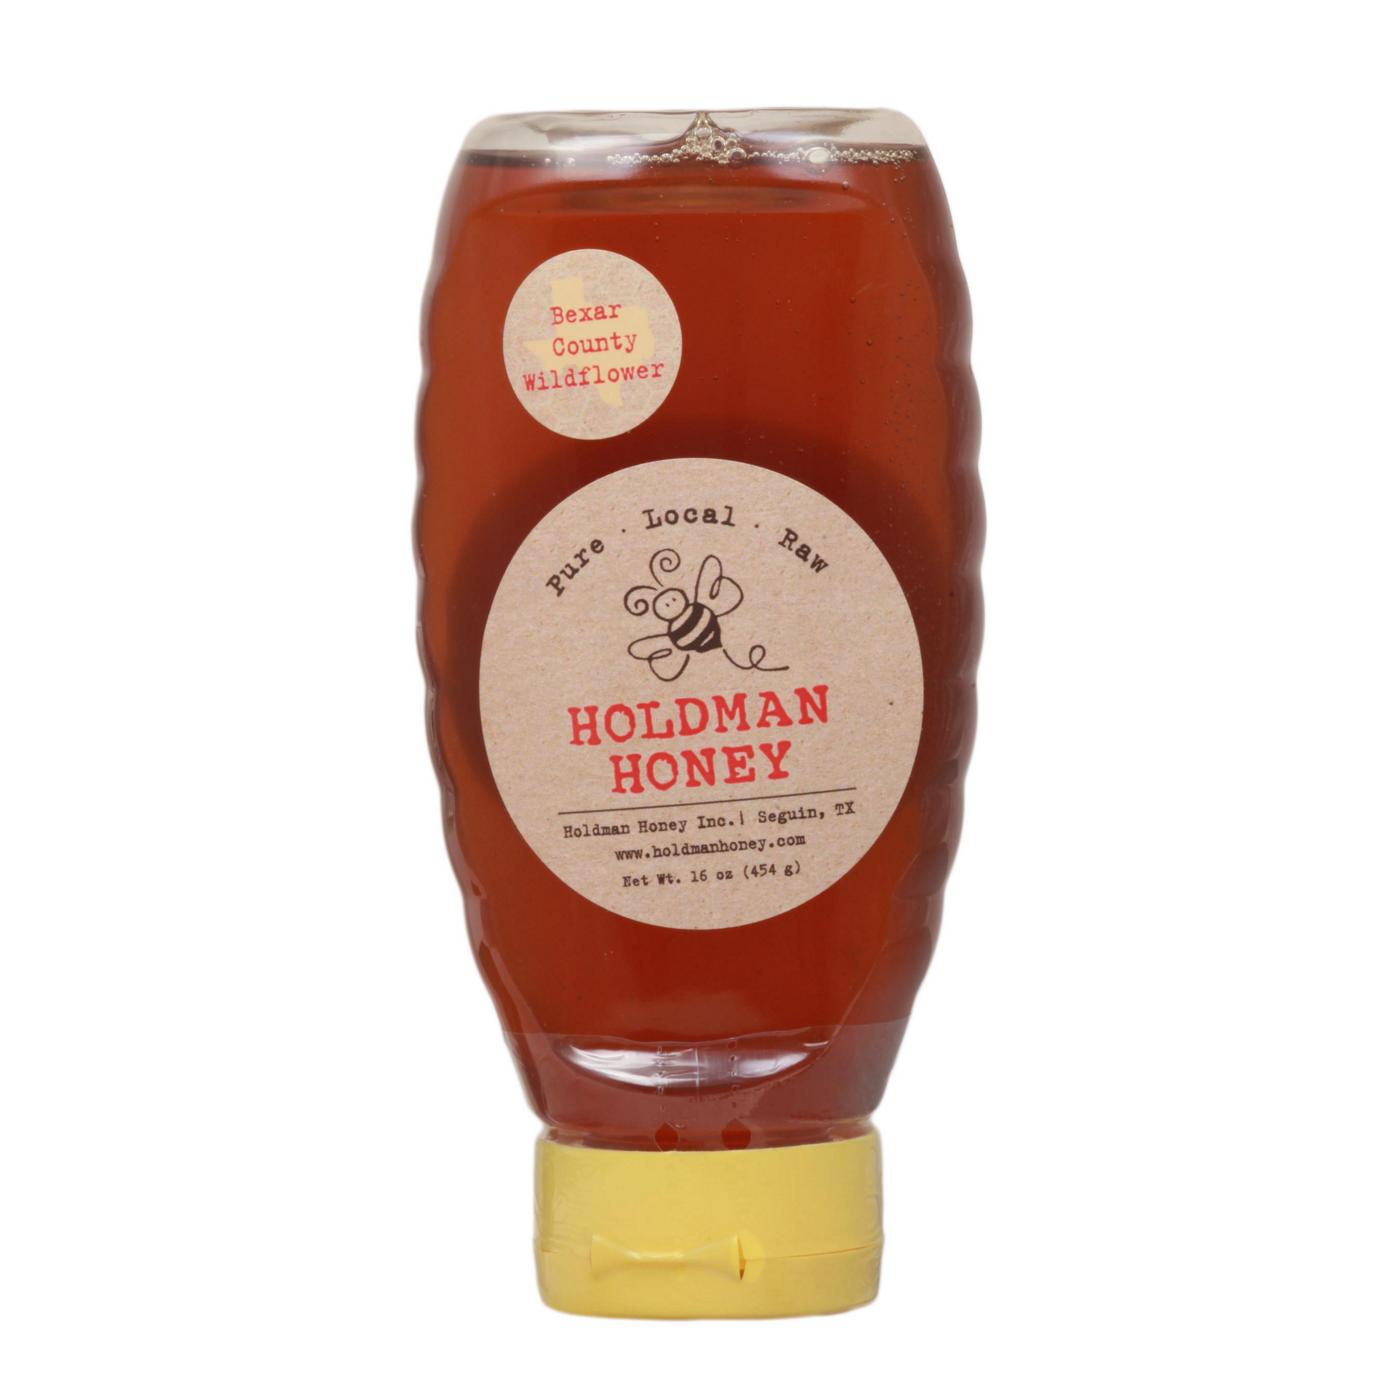 Holdman Pure Local Raw Honey; image 1 of 2